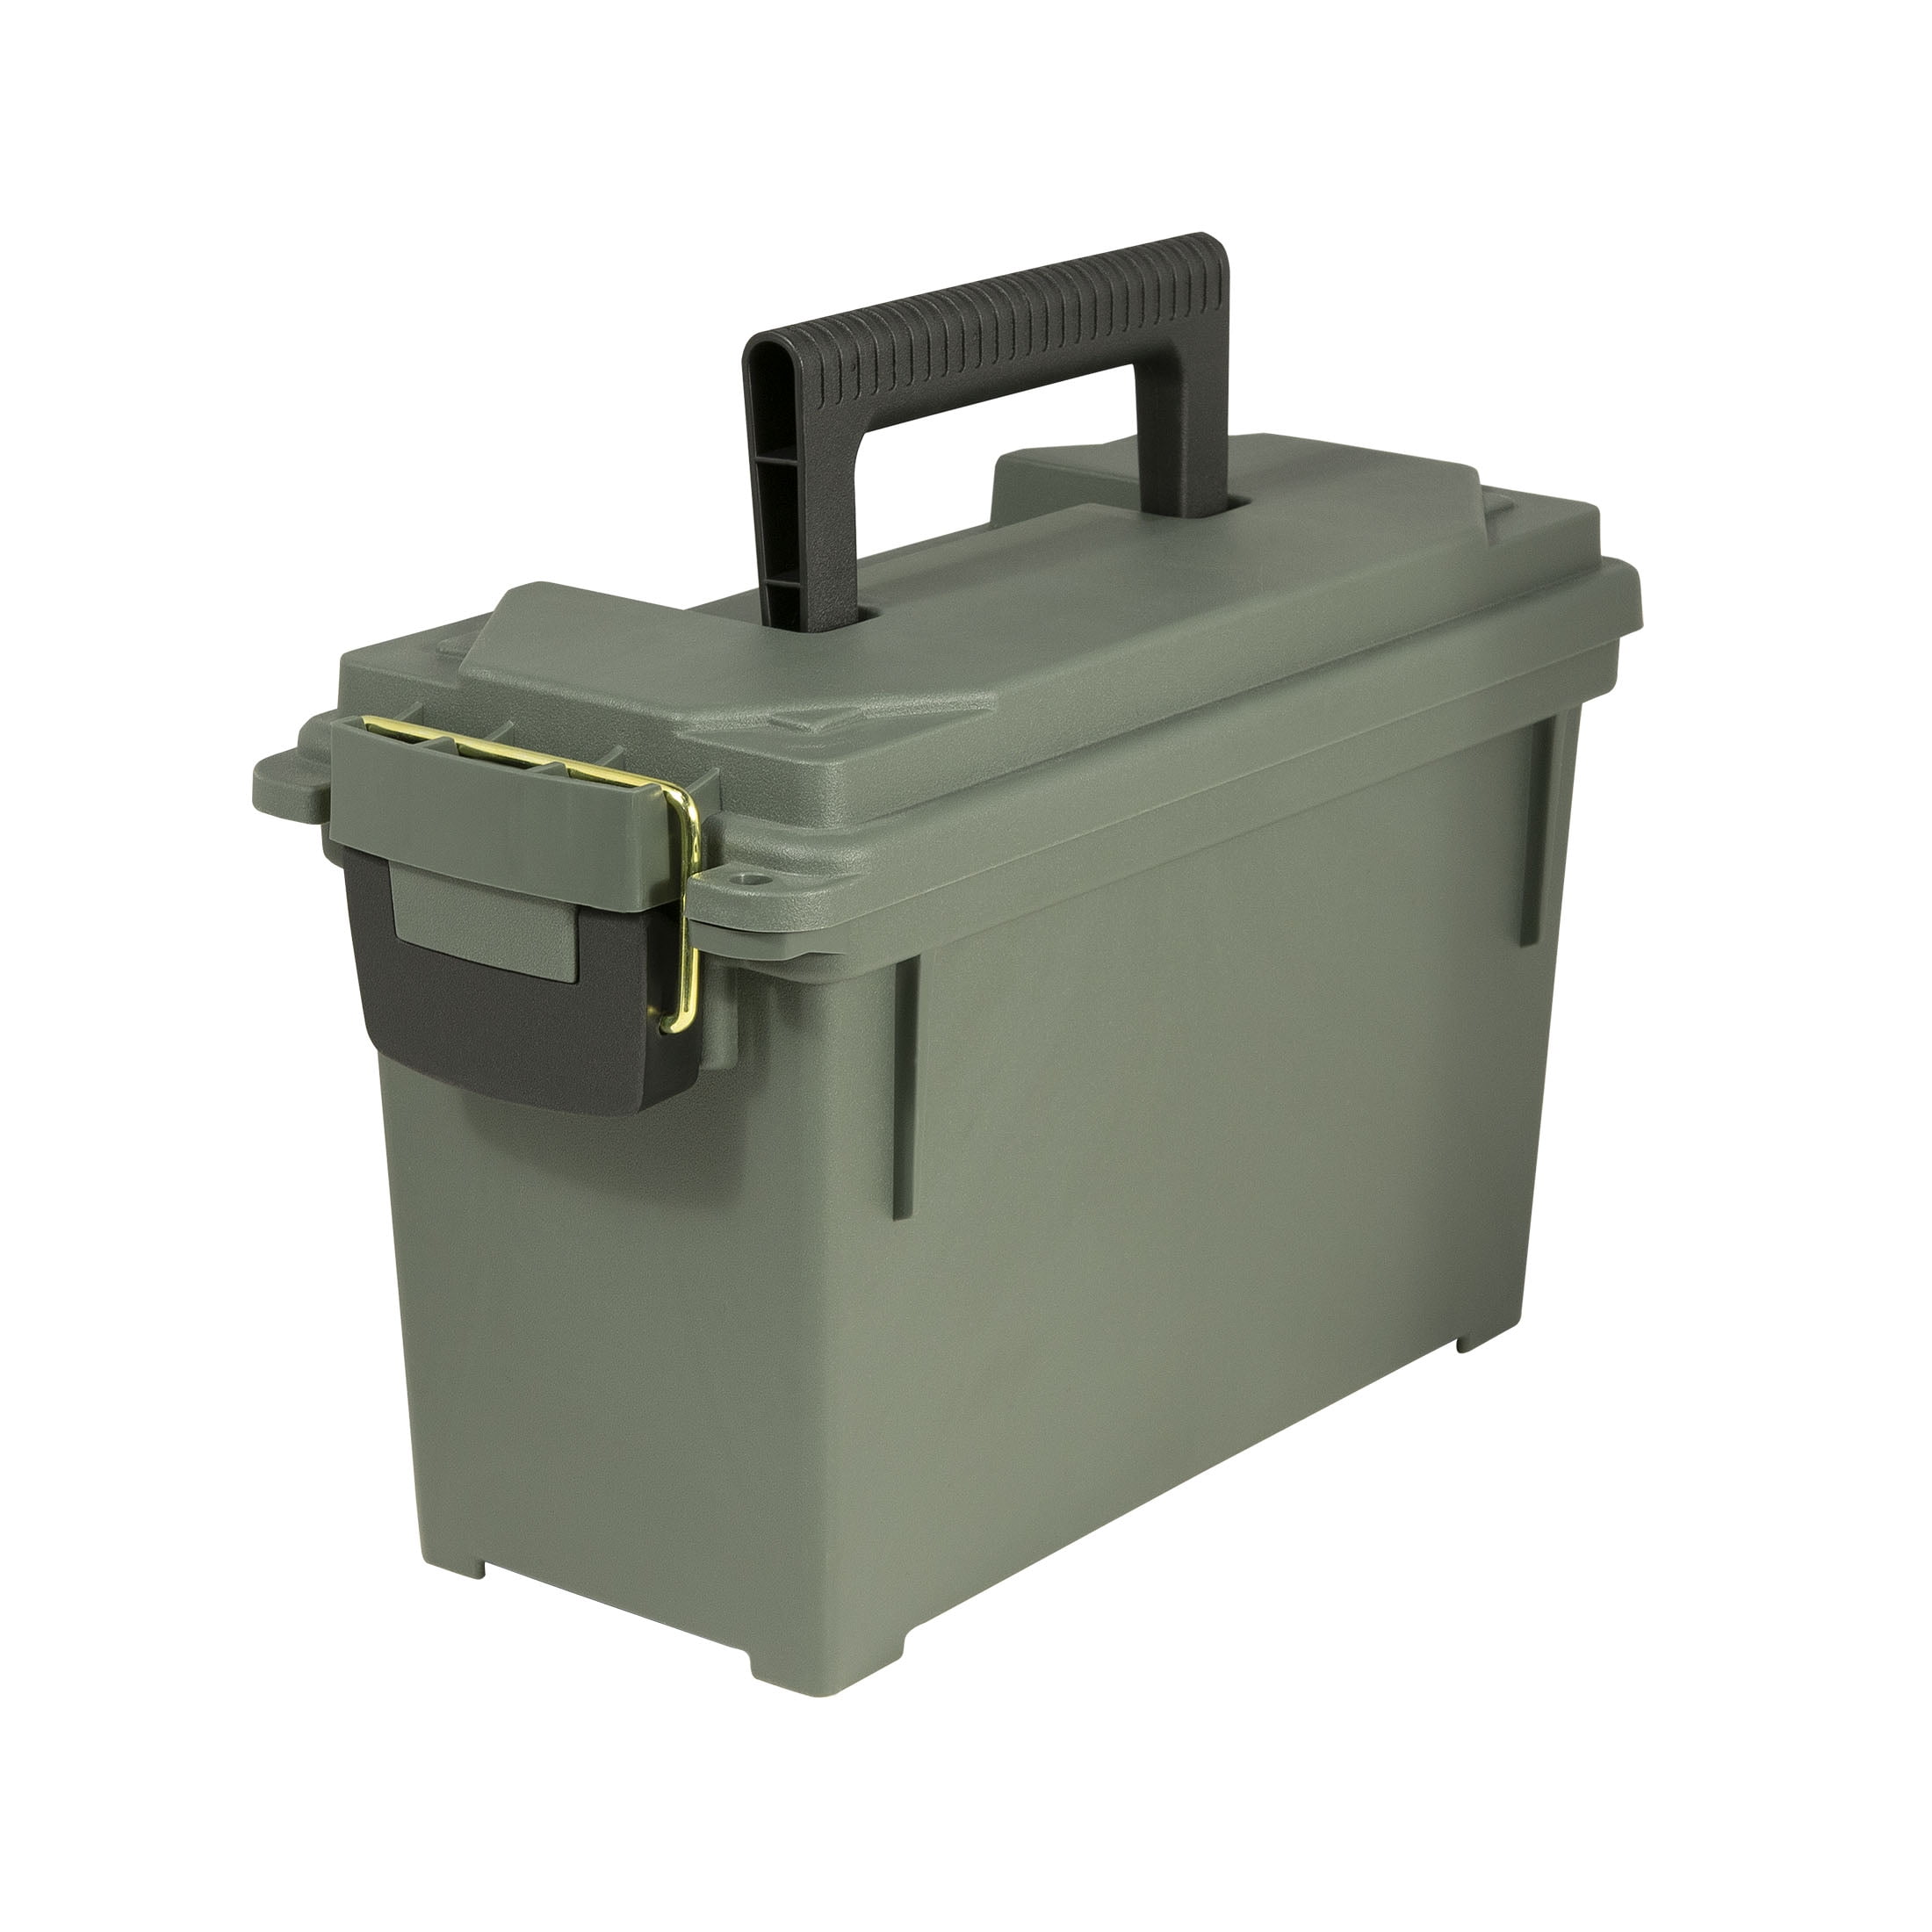 Ammo Storage Field Box Ammunition Holder Brass Organizer Military Heavy Duty Can 